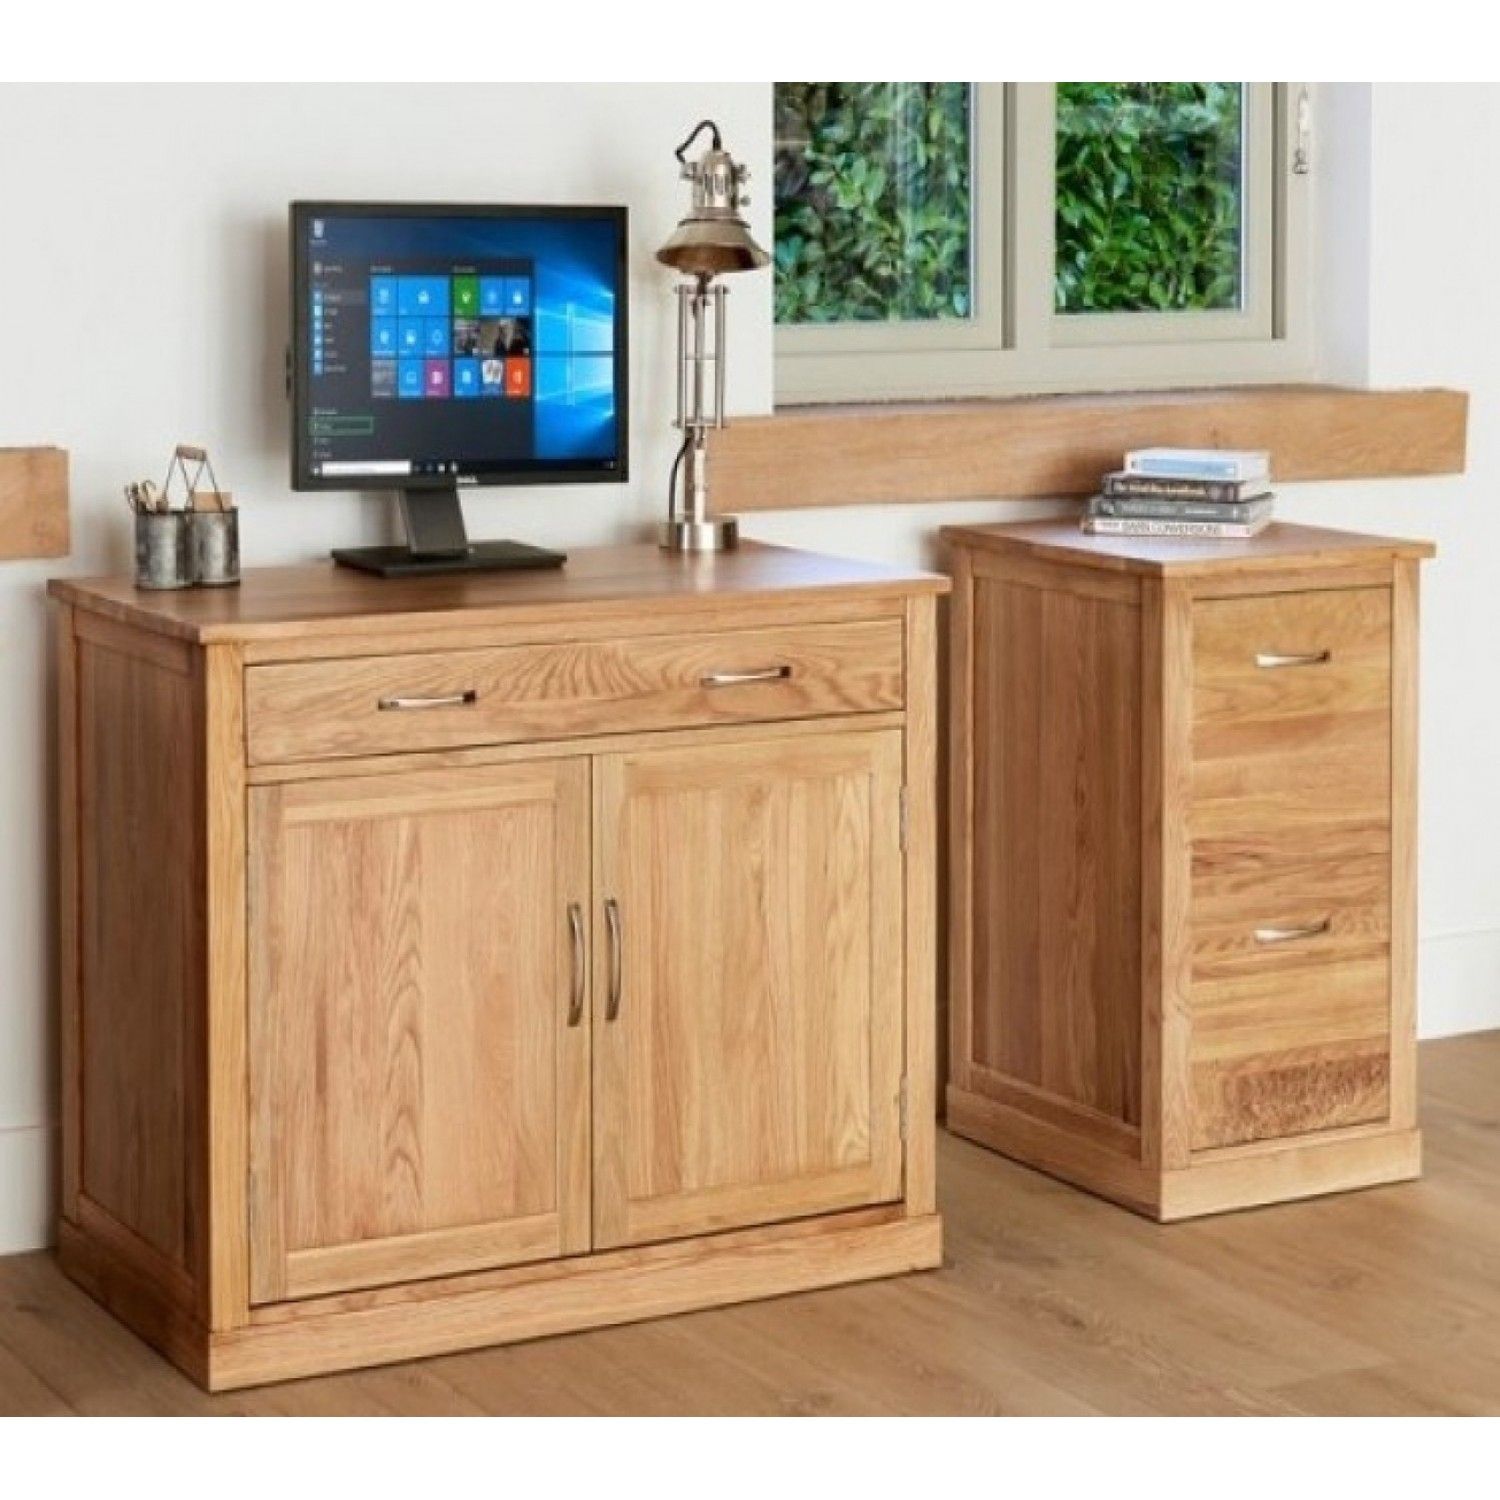 Mobel Oak Hidden Home Office Computer Desk & Small Filing Cabinet | Oak Inside Computer Desks With Filing Cabinet (View 13 of 15)